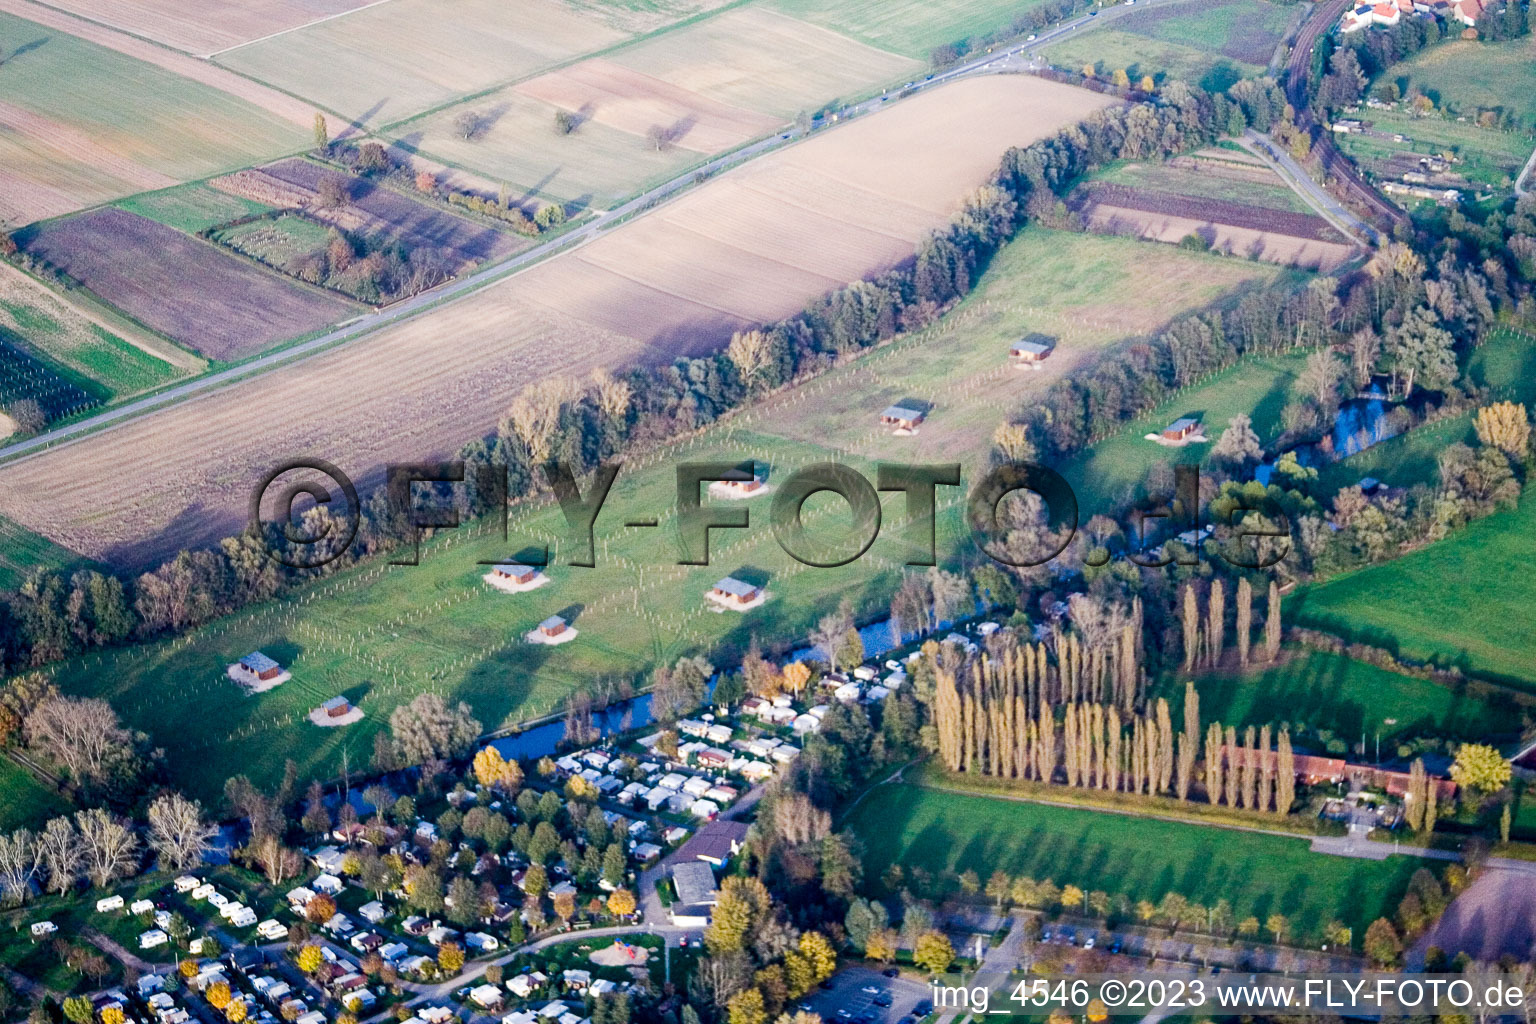 Oblique view of Mhou Ostrich Farm in Rülzheim in the state Rhineland-Palatinate, Germany